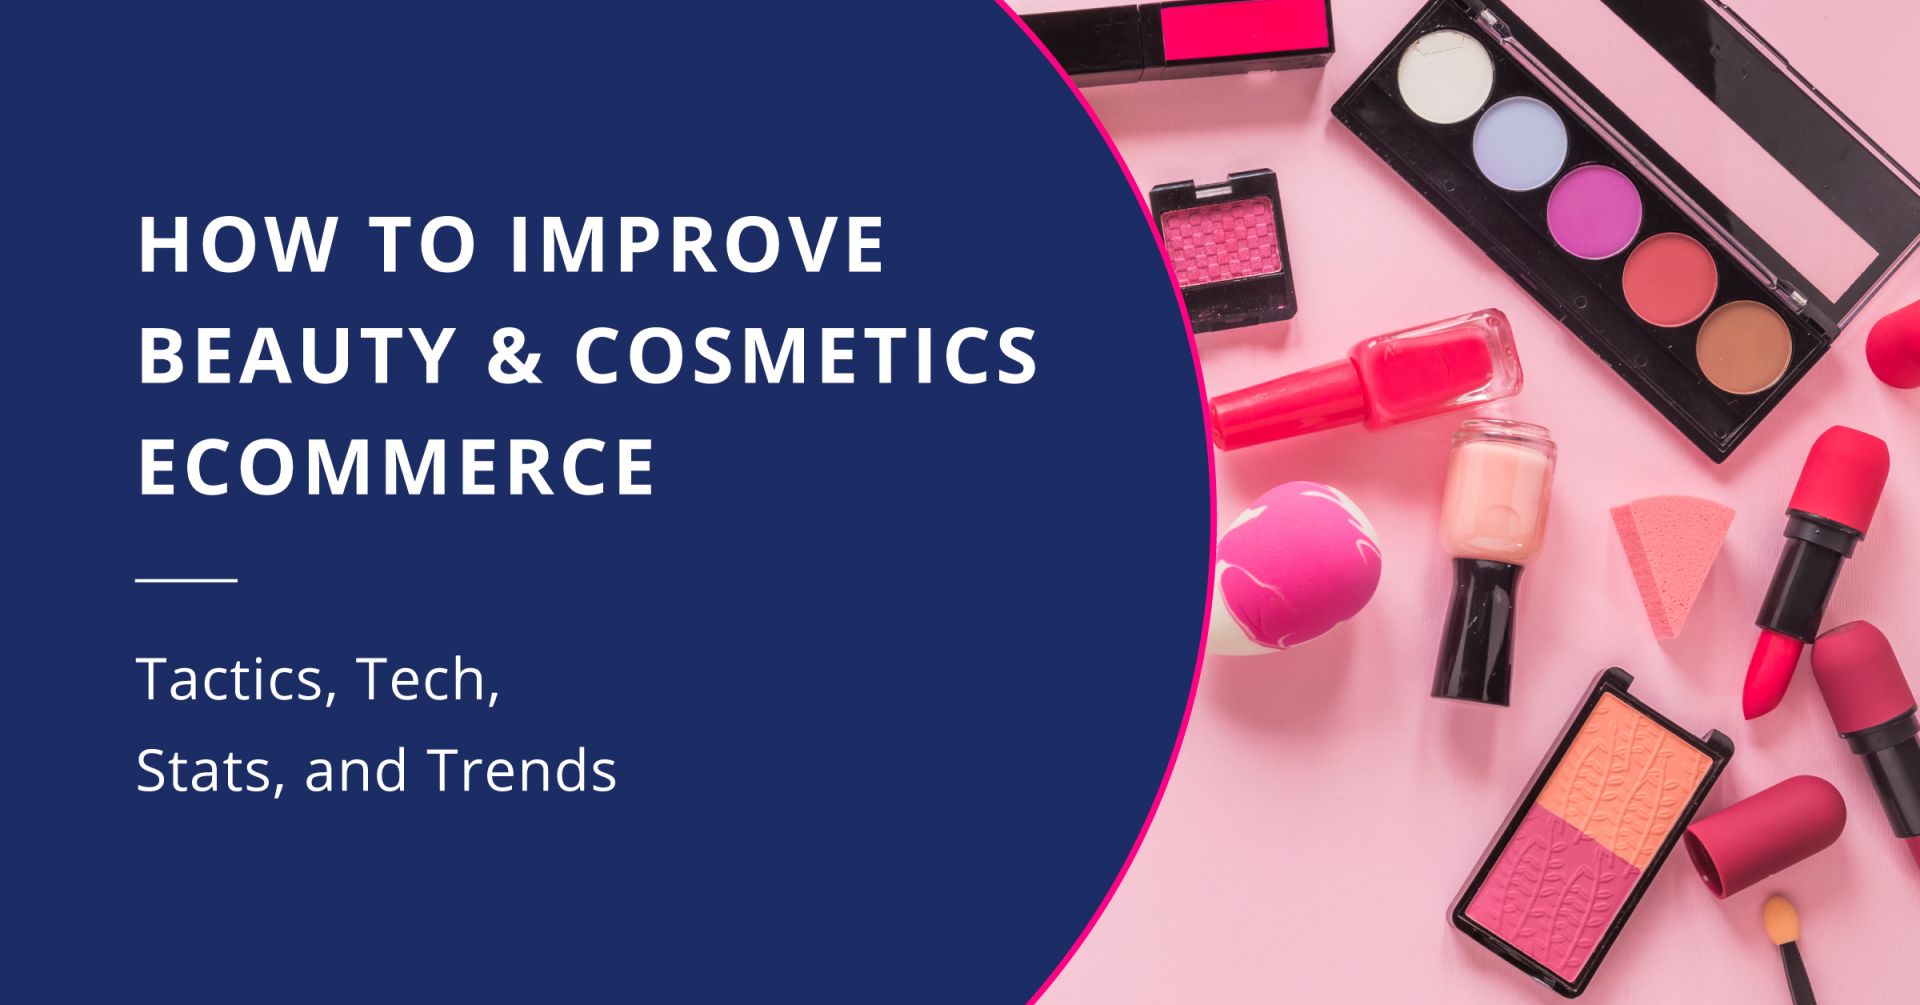 Cosmetics Products Market May See a Big Move